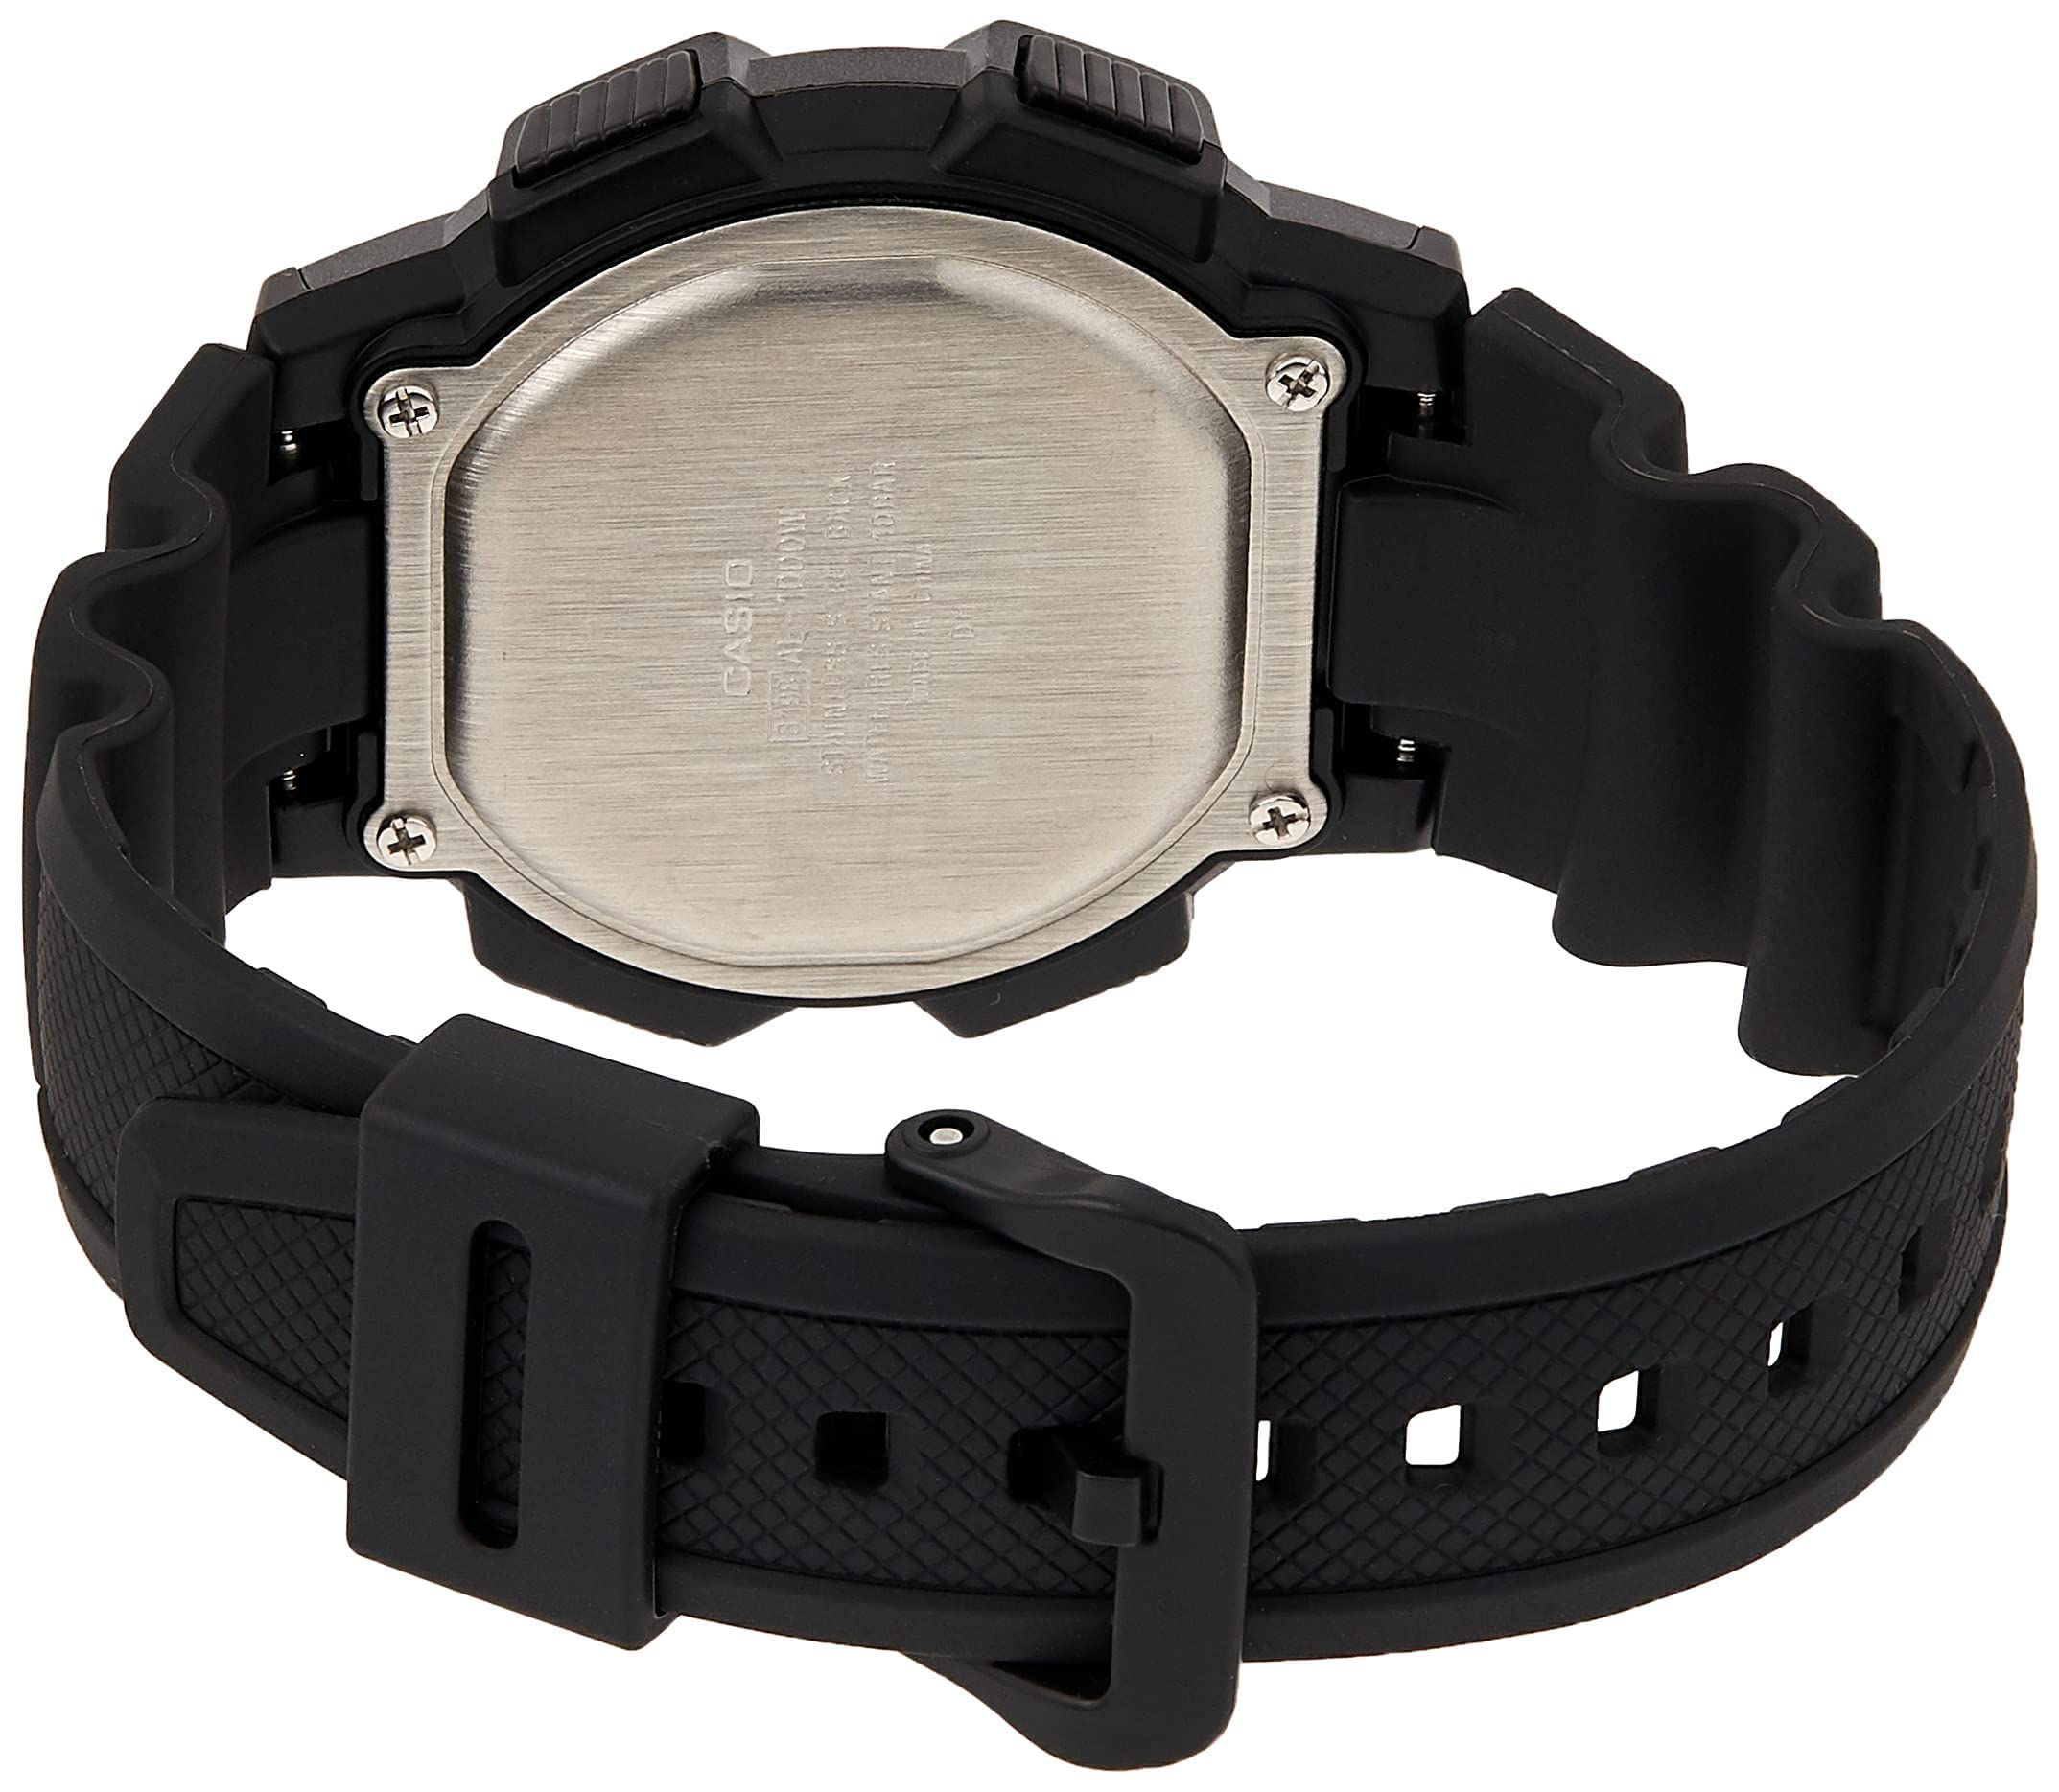 Casio Men’s AE-1000W-1AVDF Sporty Digital Quartz Watch